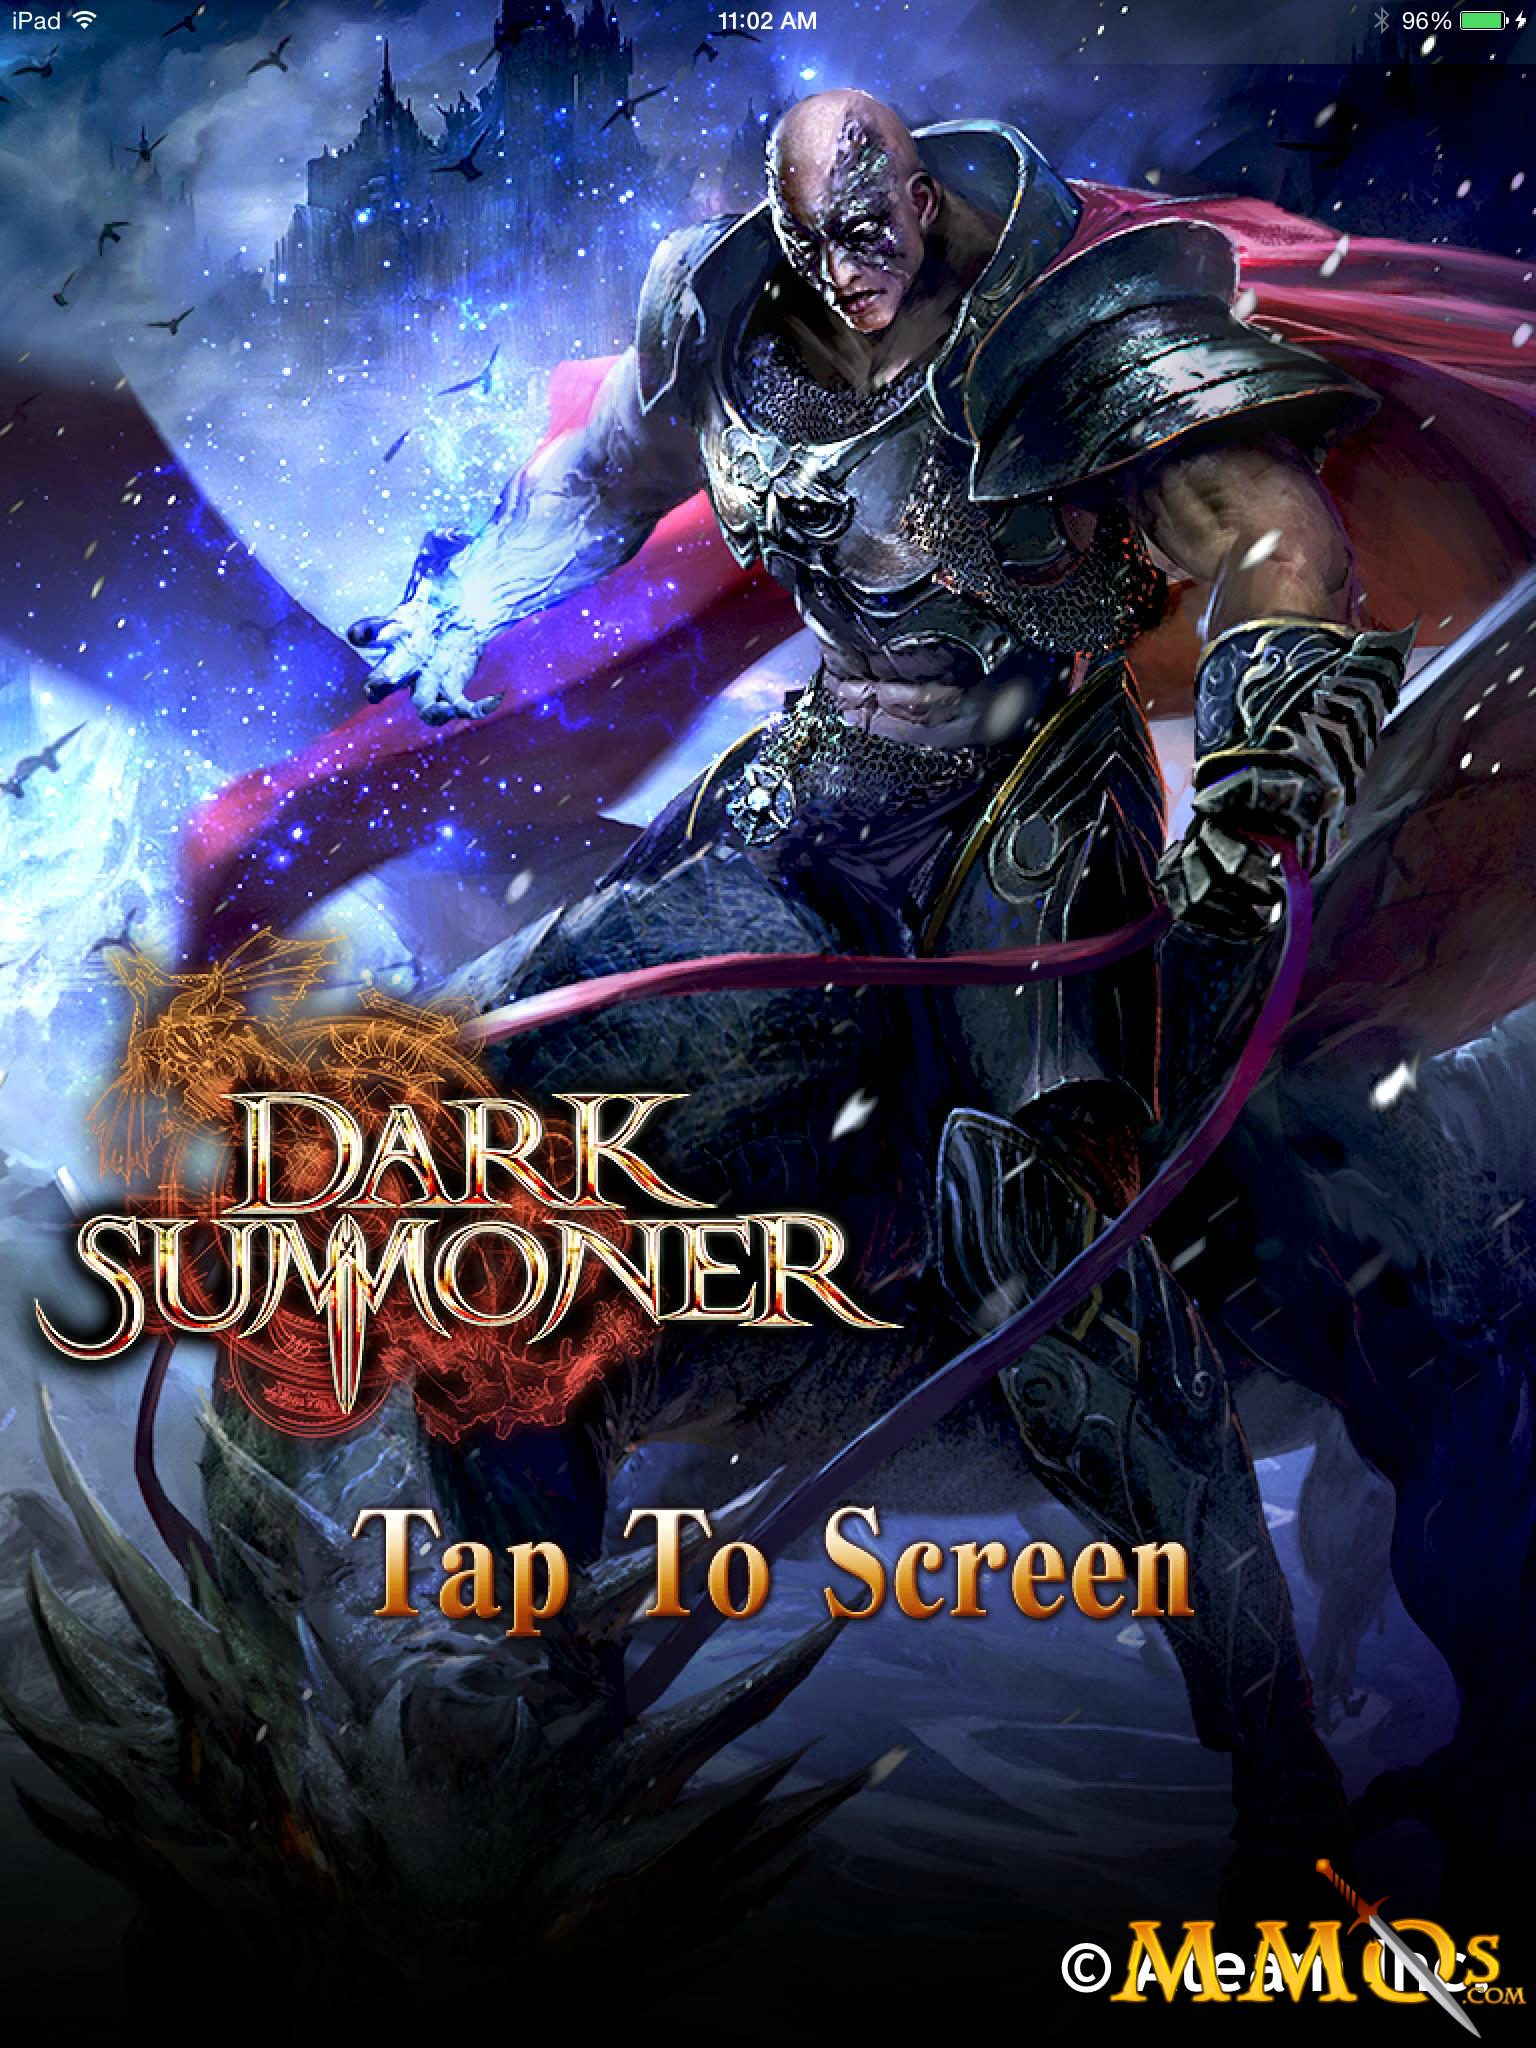 Dark Summoner on the App Store